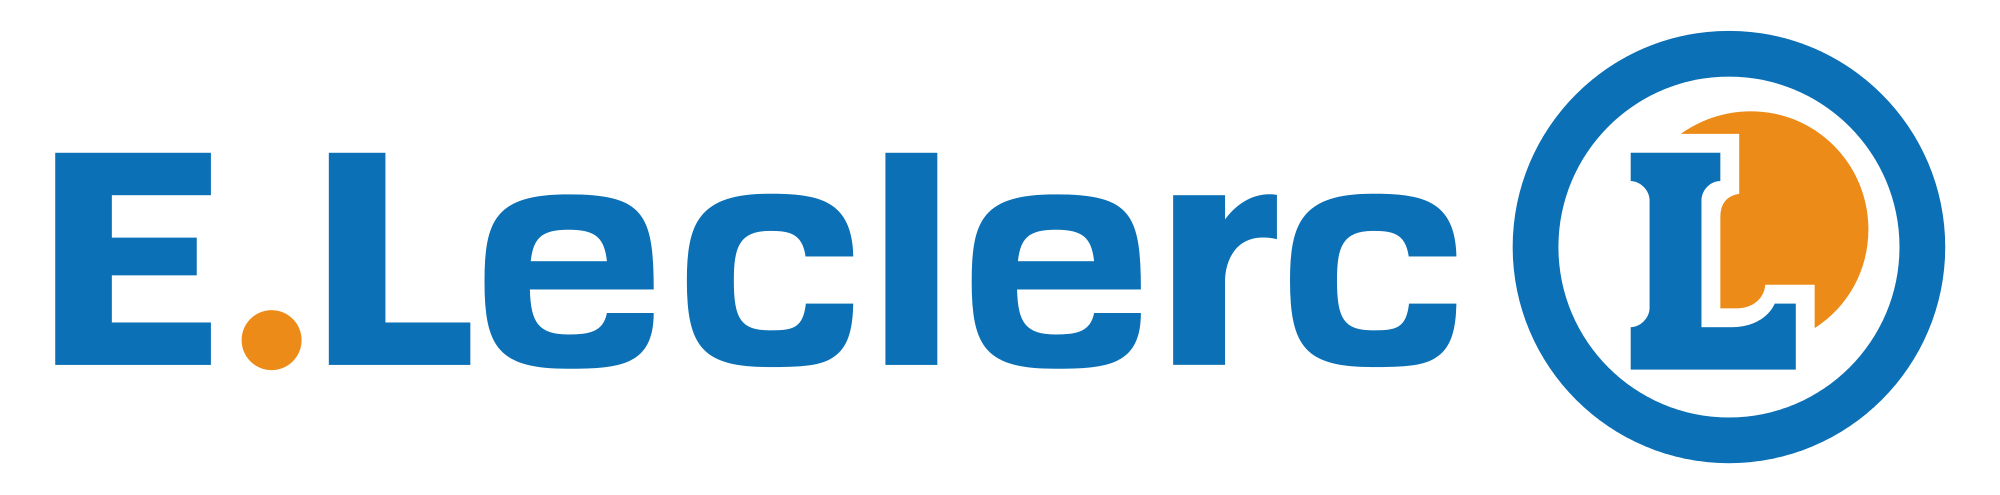 E-Leclerc_logo-